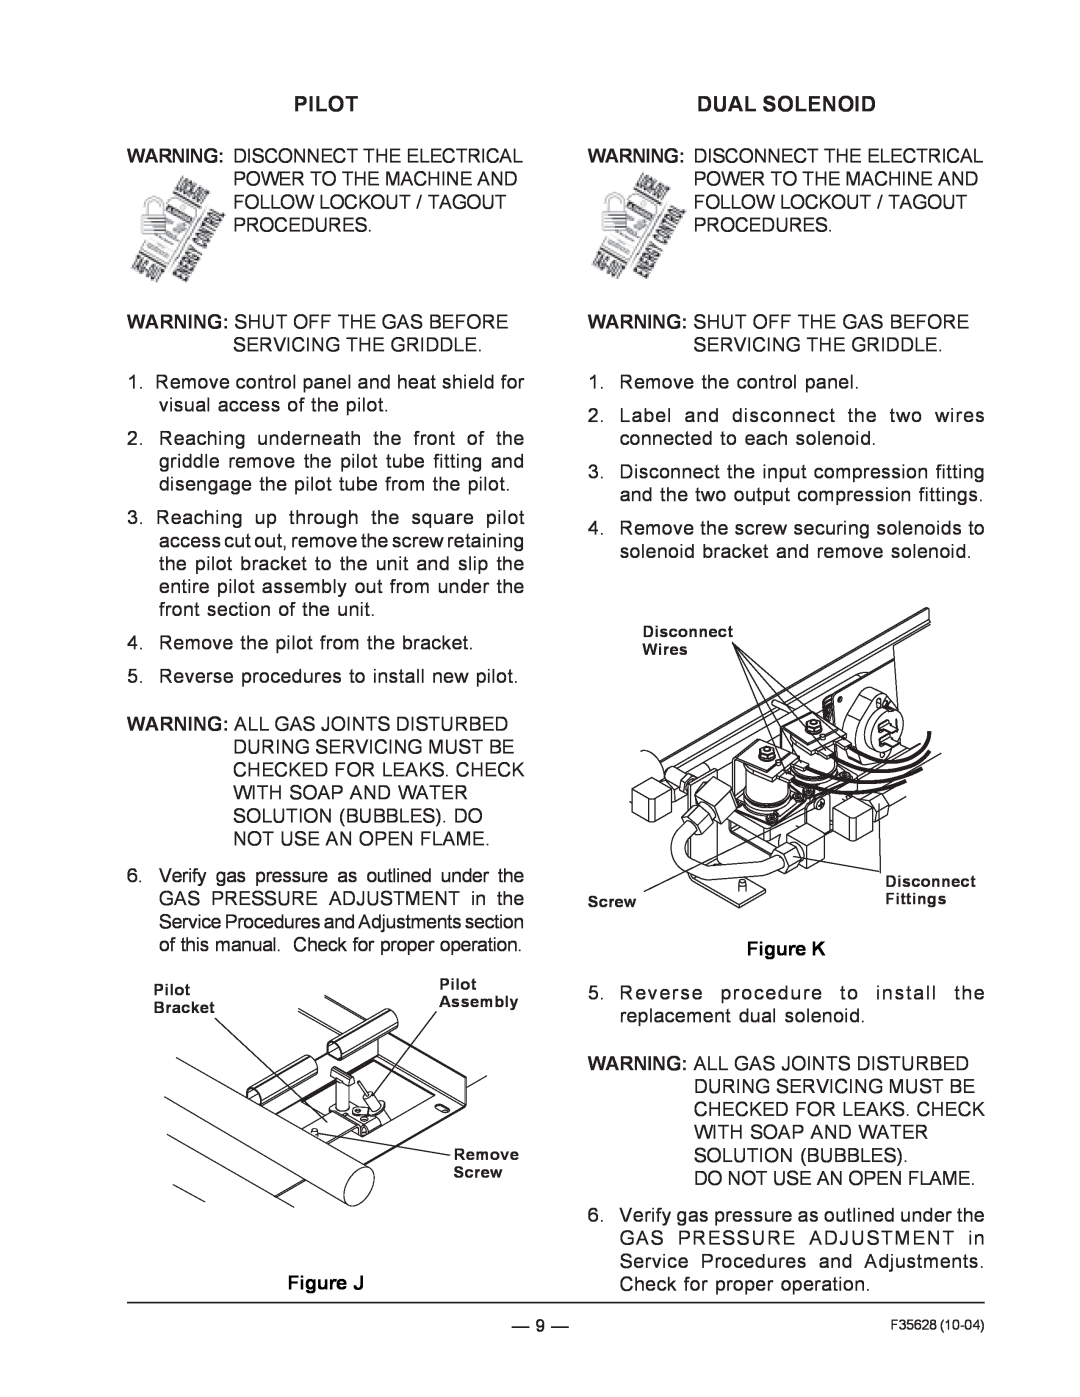 Vulcan-Hart service manual Pilot, Dual Solenoid, Figure J, Figure K 